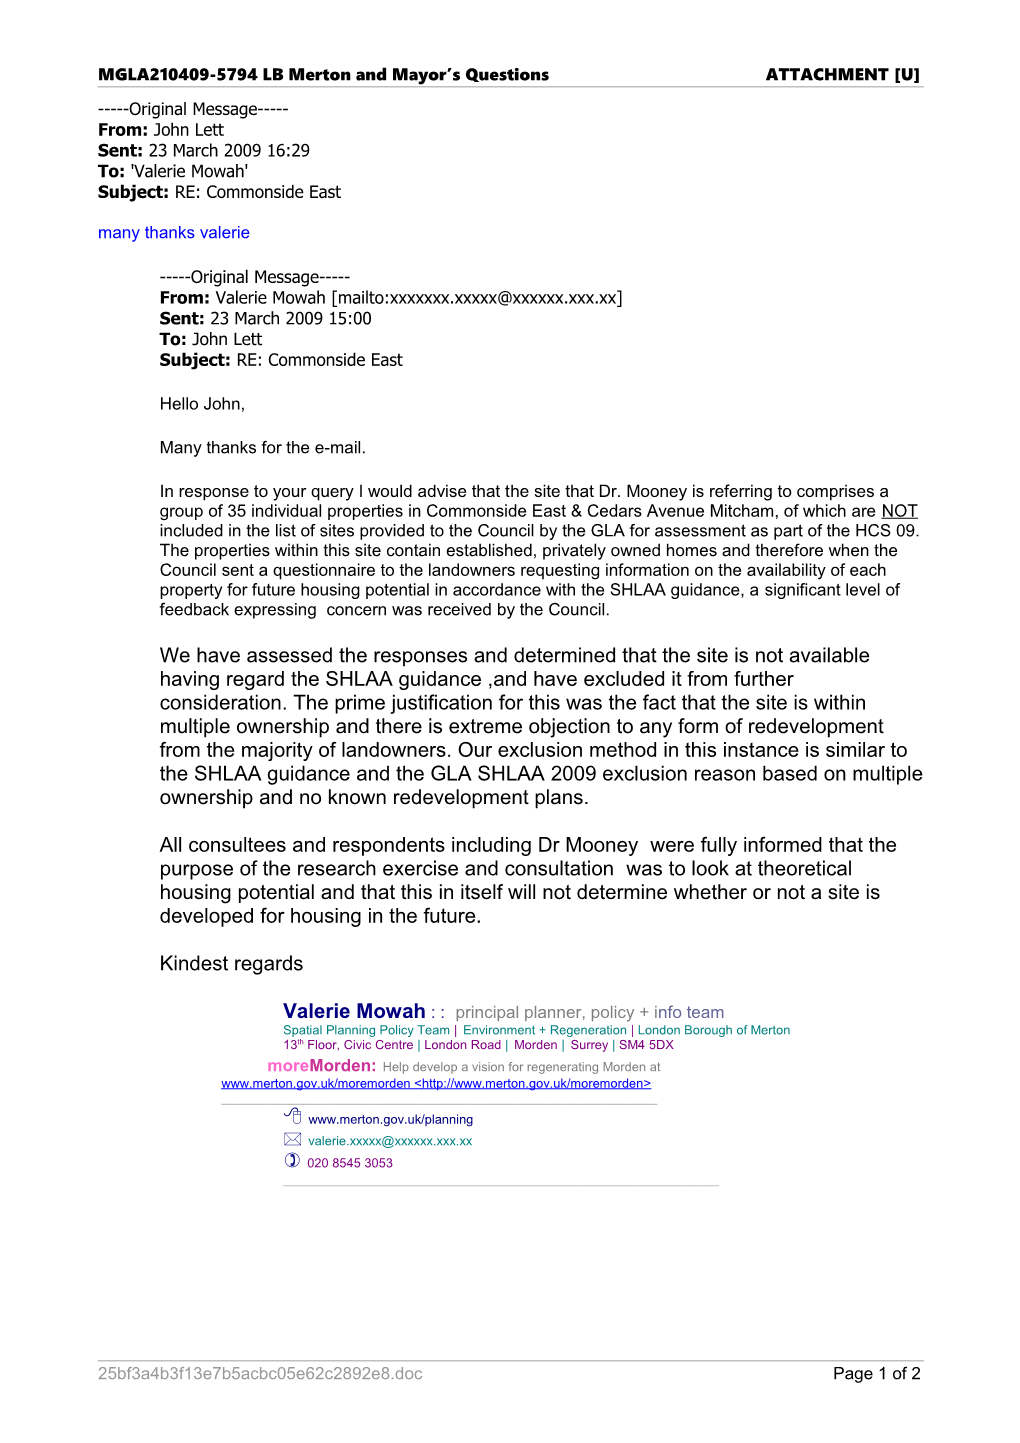 ATTACHMENT U 2009-03-23 16.25 Emails Between John Lett, GLA and Valerie Mowah, LB Merton